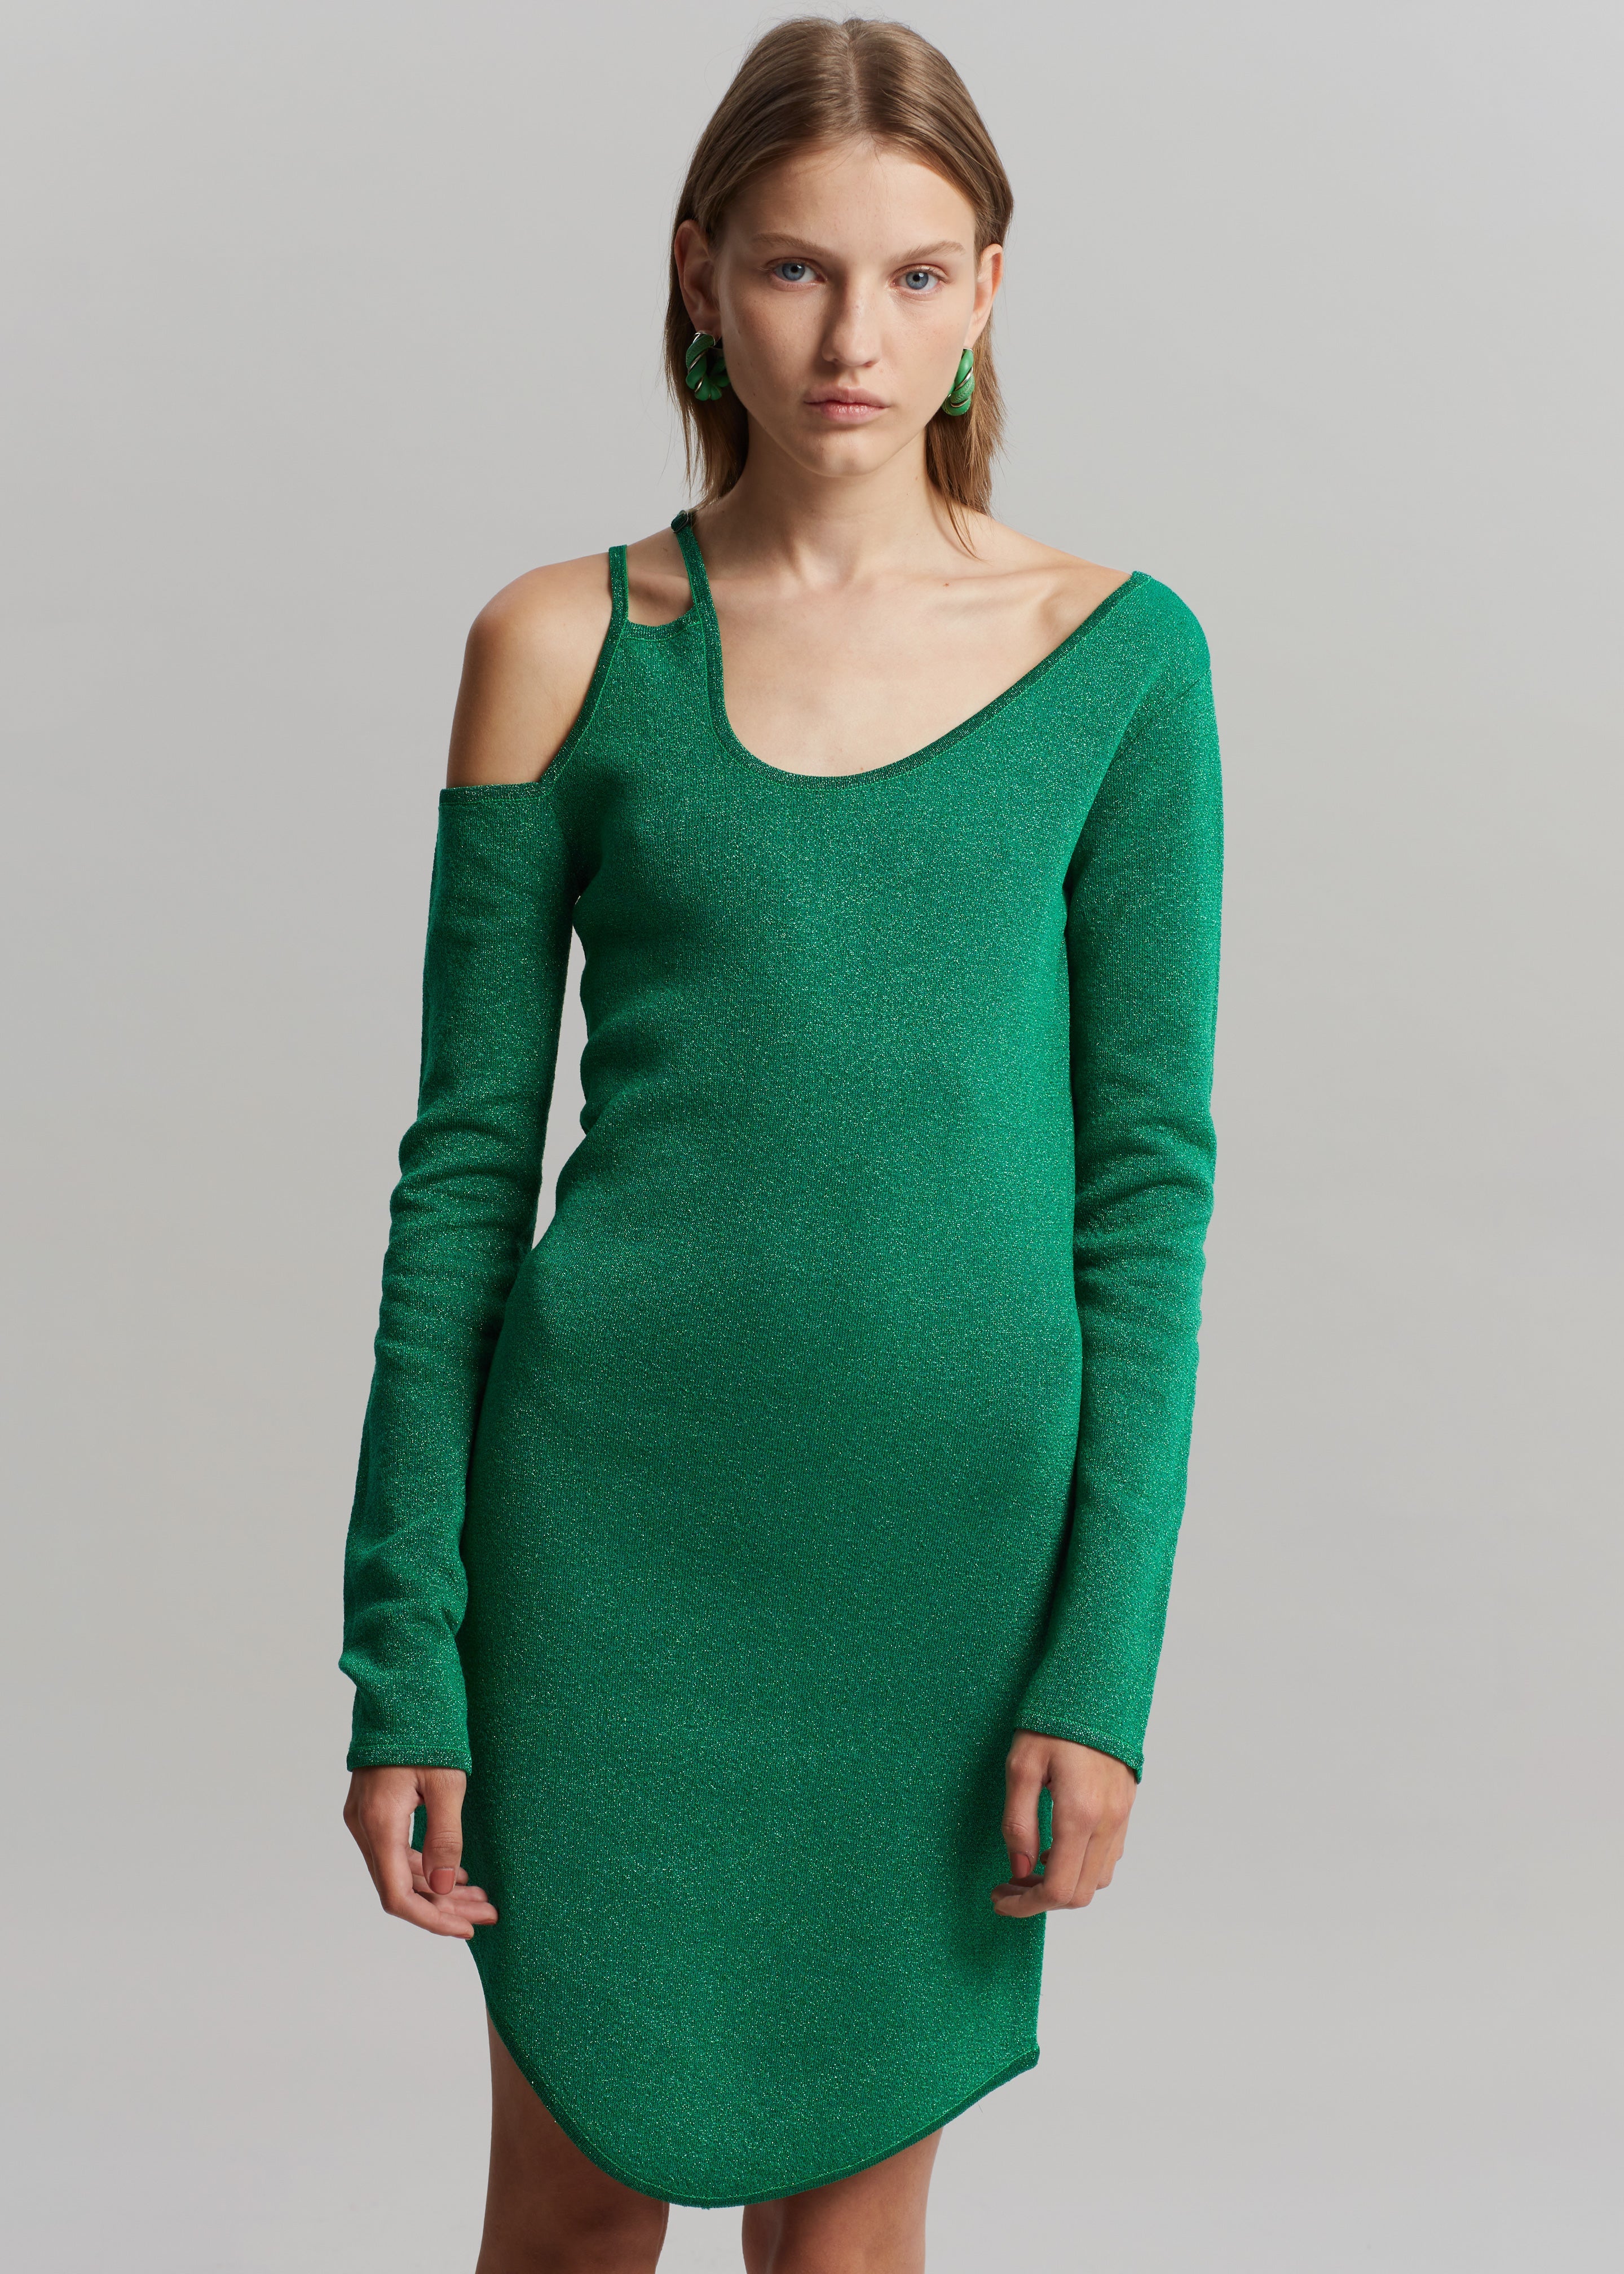 JW Anderson Cut Out Detail Asymmetric Dress - Emerald - 3